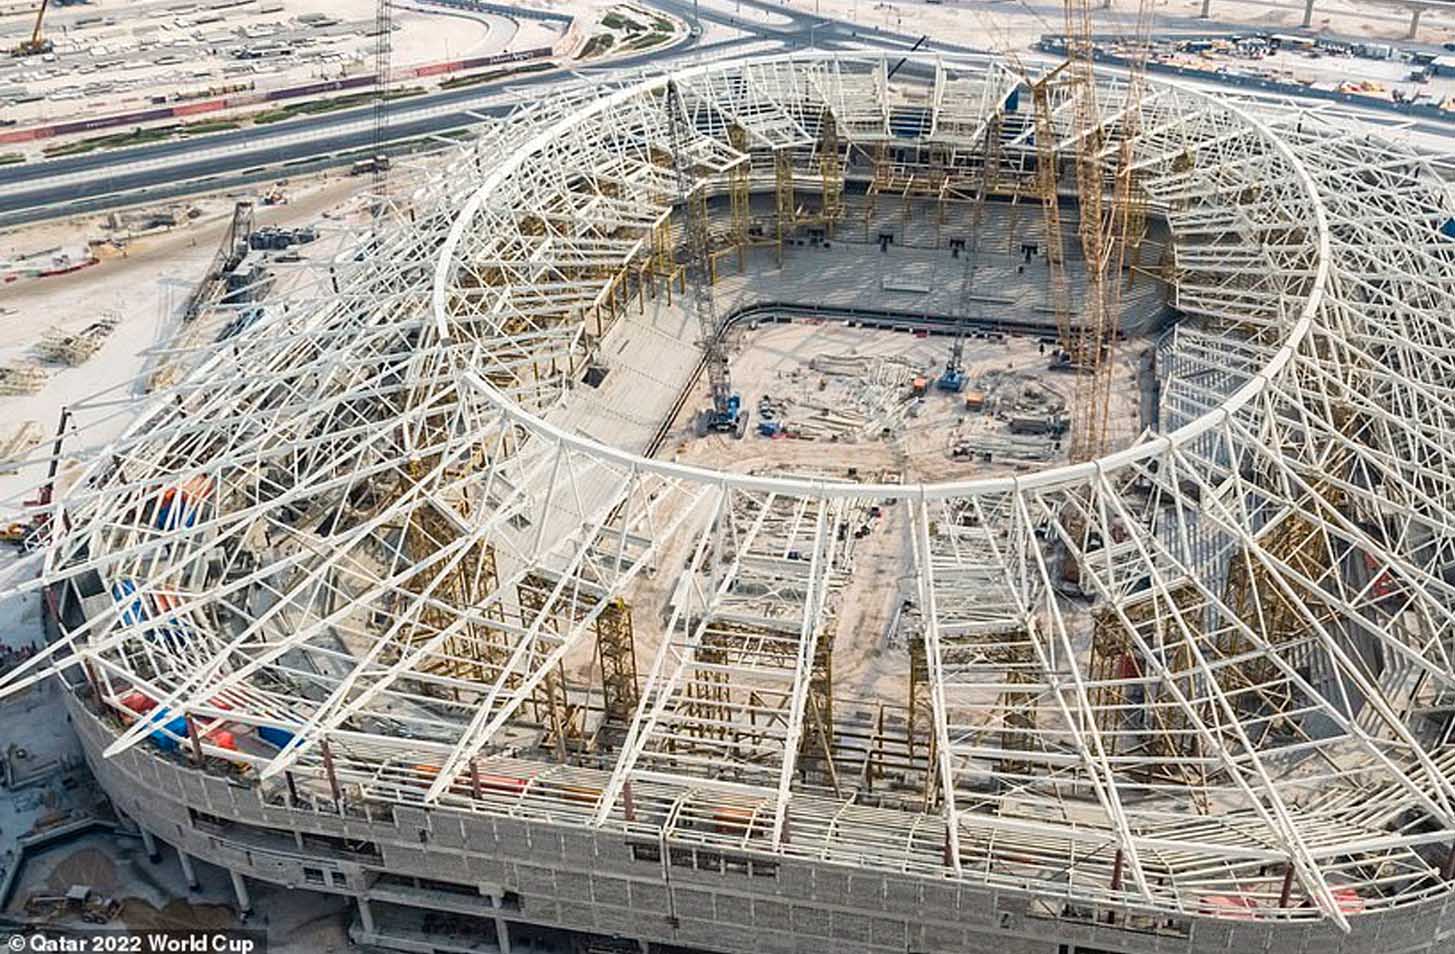 Fifa Reveal Progress Of All 8 Qatar World Cup Stadiums Soccerbible